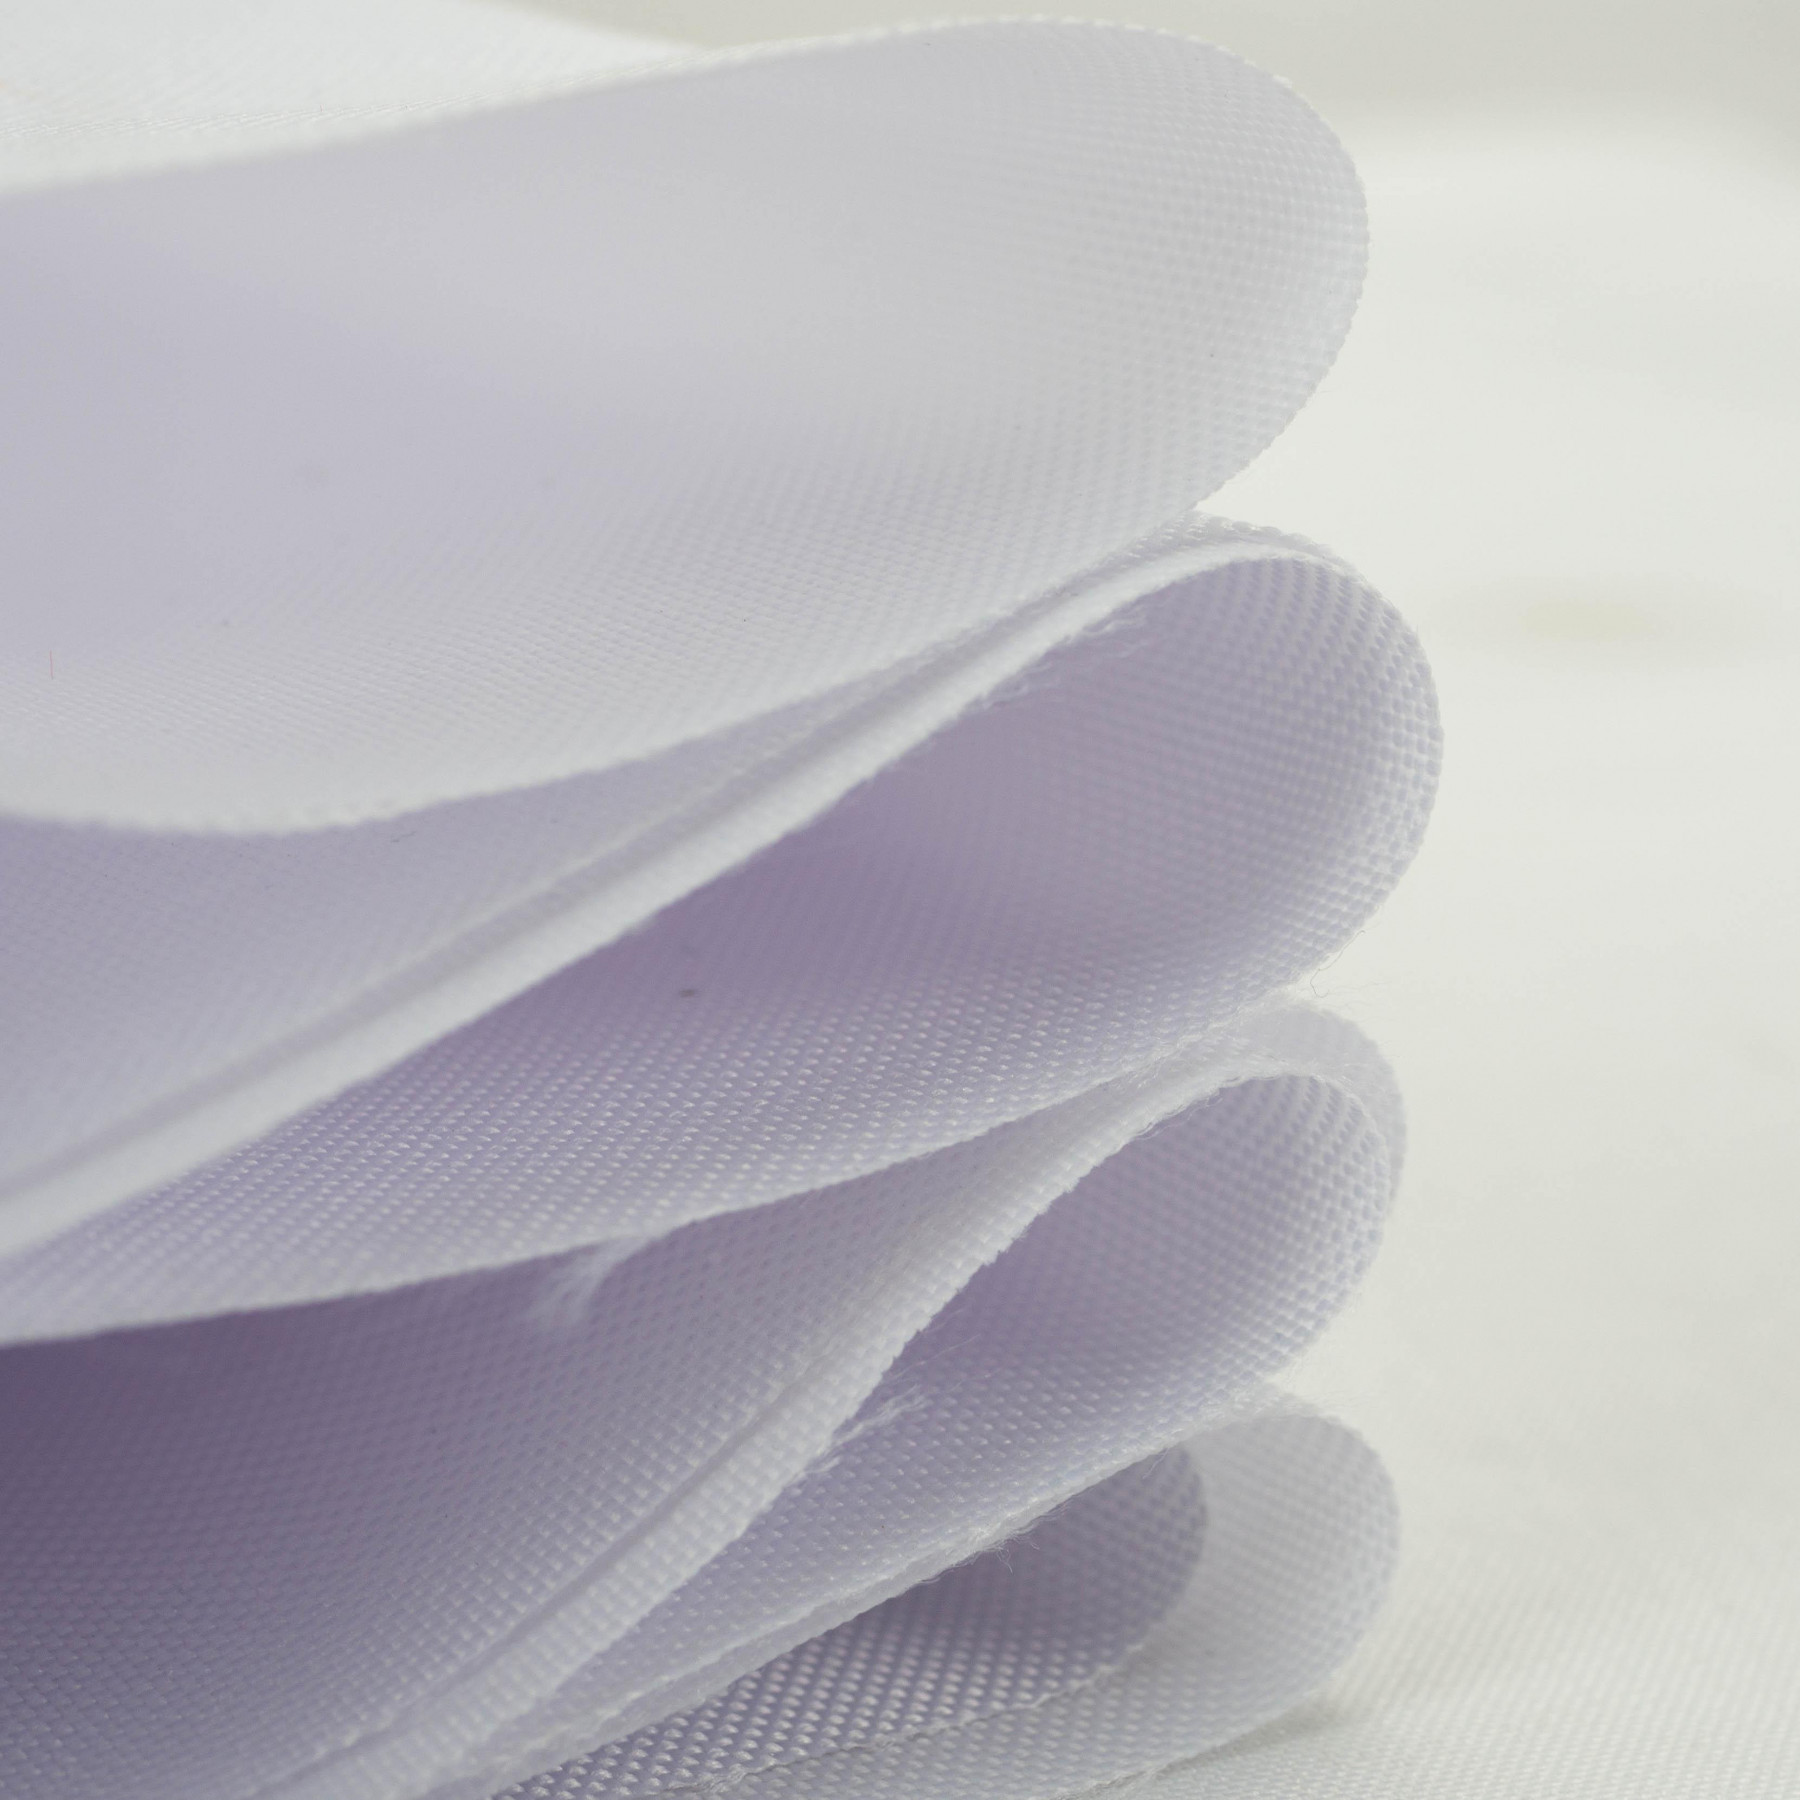 BOOMERANG (PASTEL SKY) / mint - Waterproof woven fabric